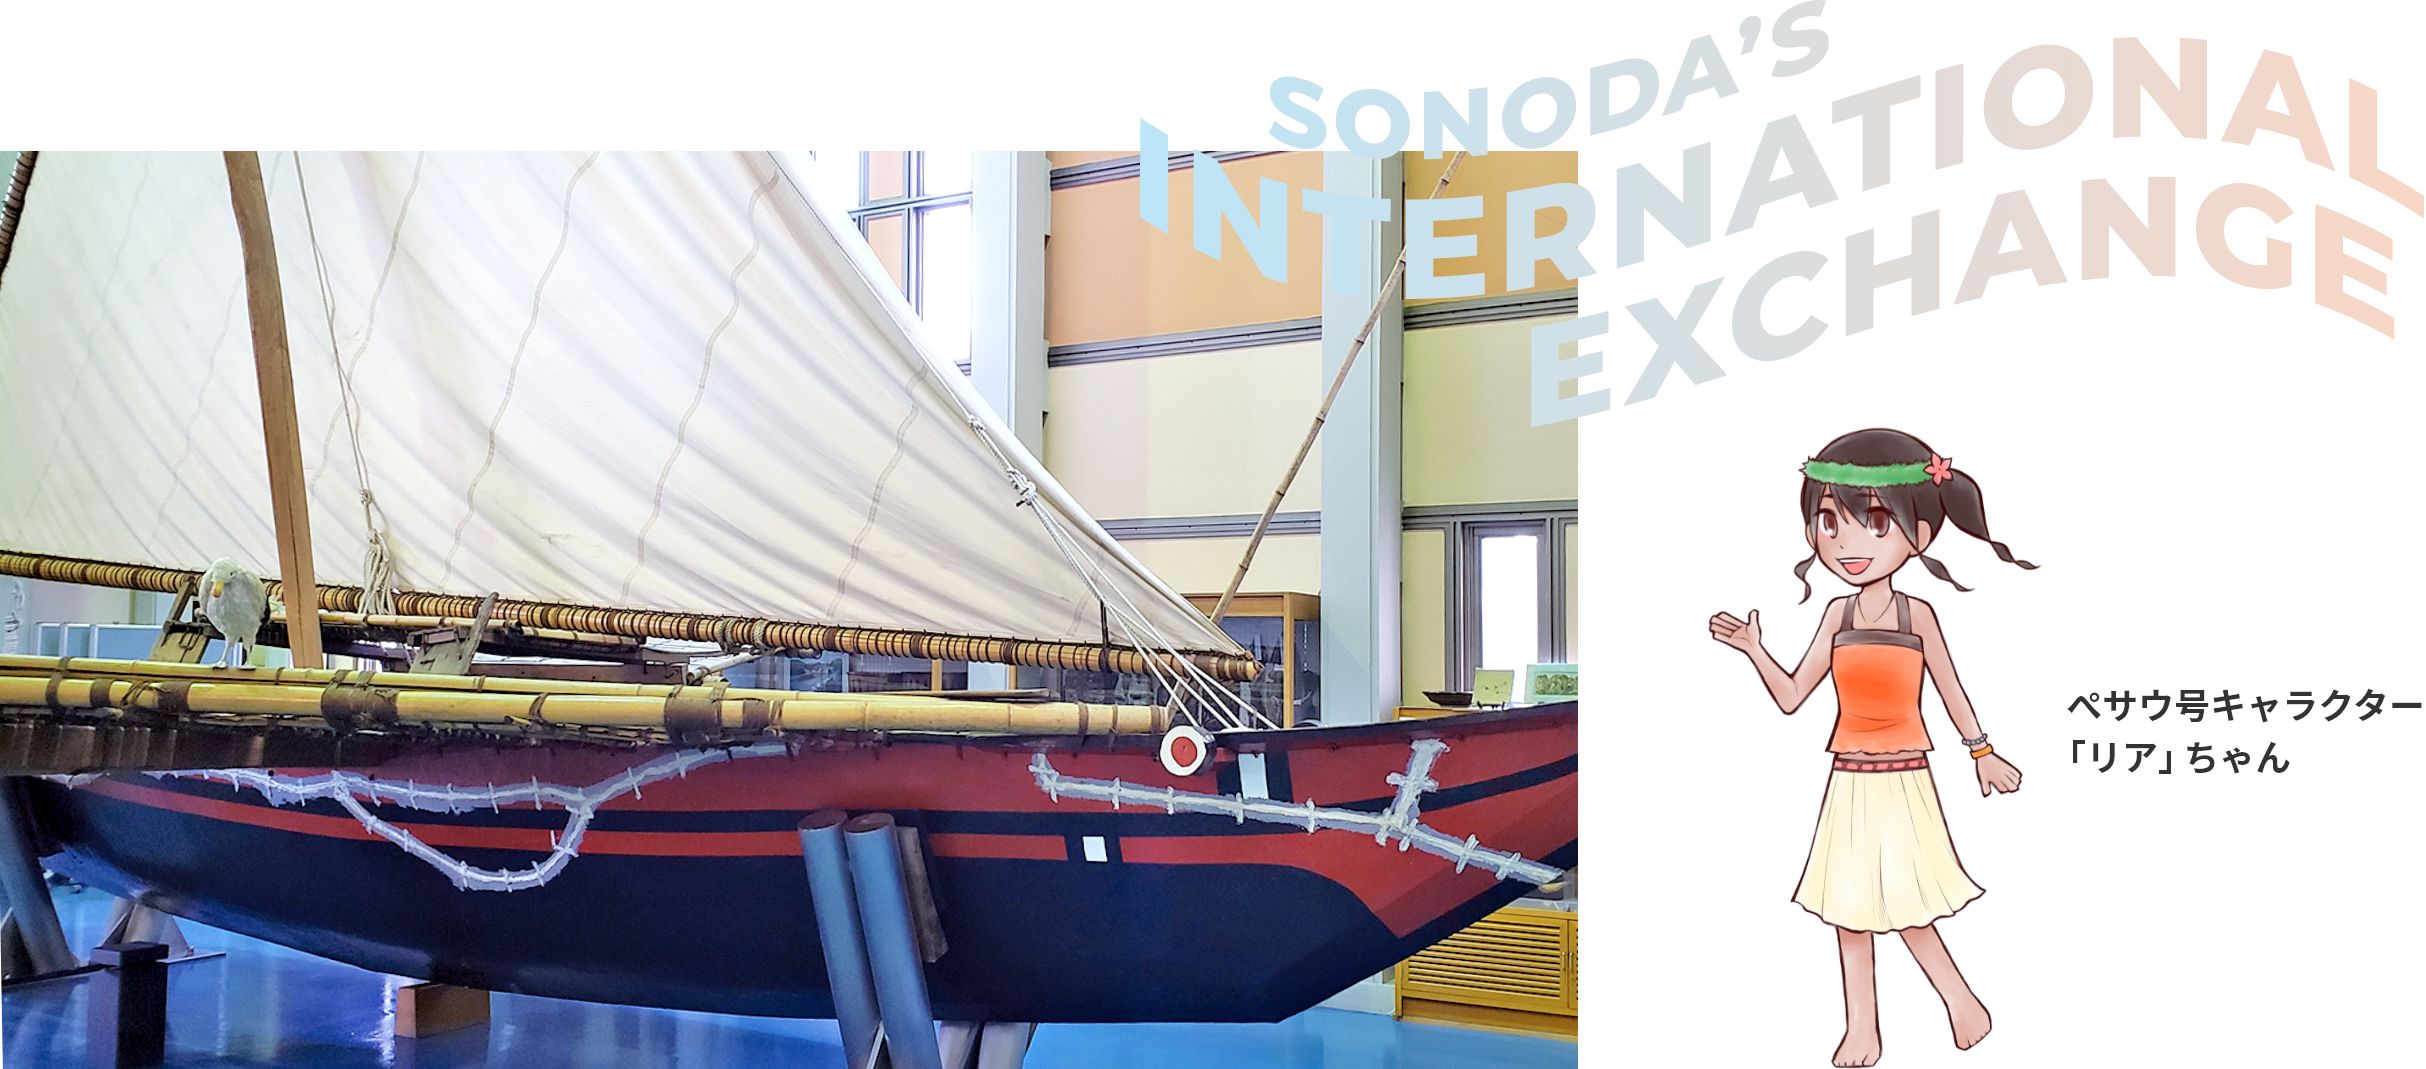 SONODA'S INTERNATIONAL EXCHANGE